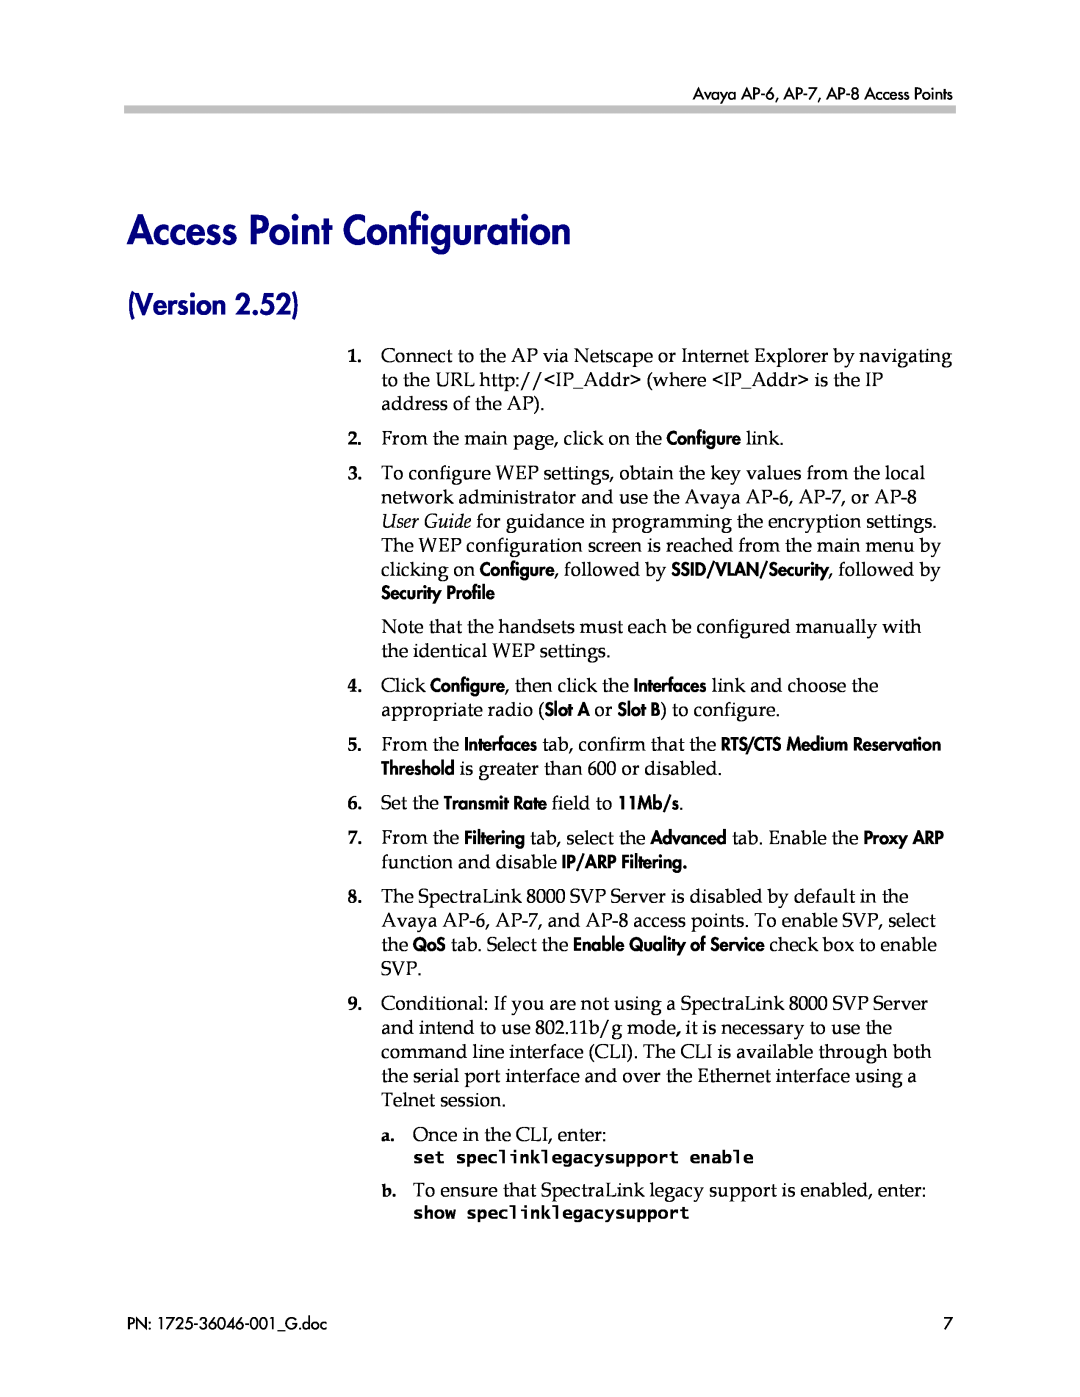 Polycom AP-8, AP-7, AP-6 manual Version, Access Point Configuration, set speclinklegacysupport enable 